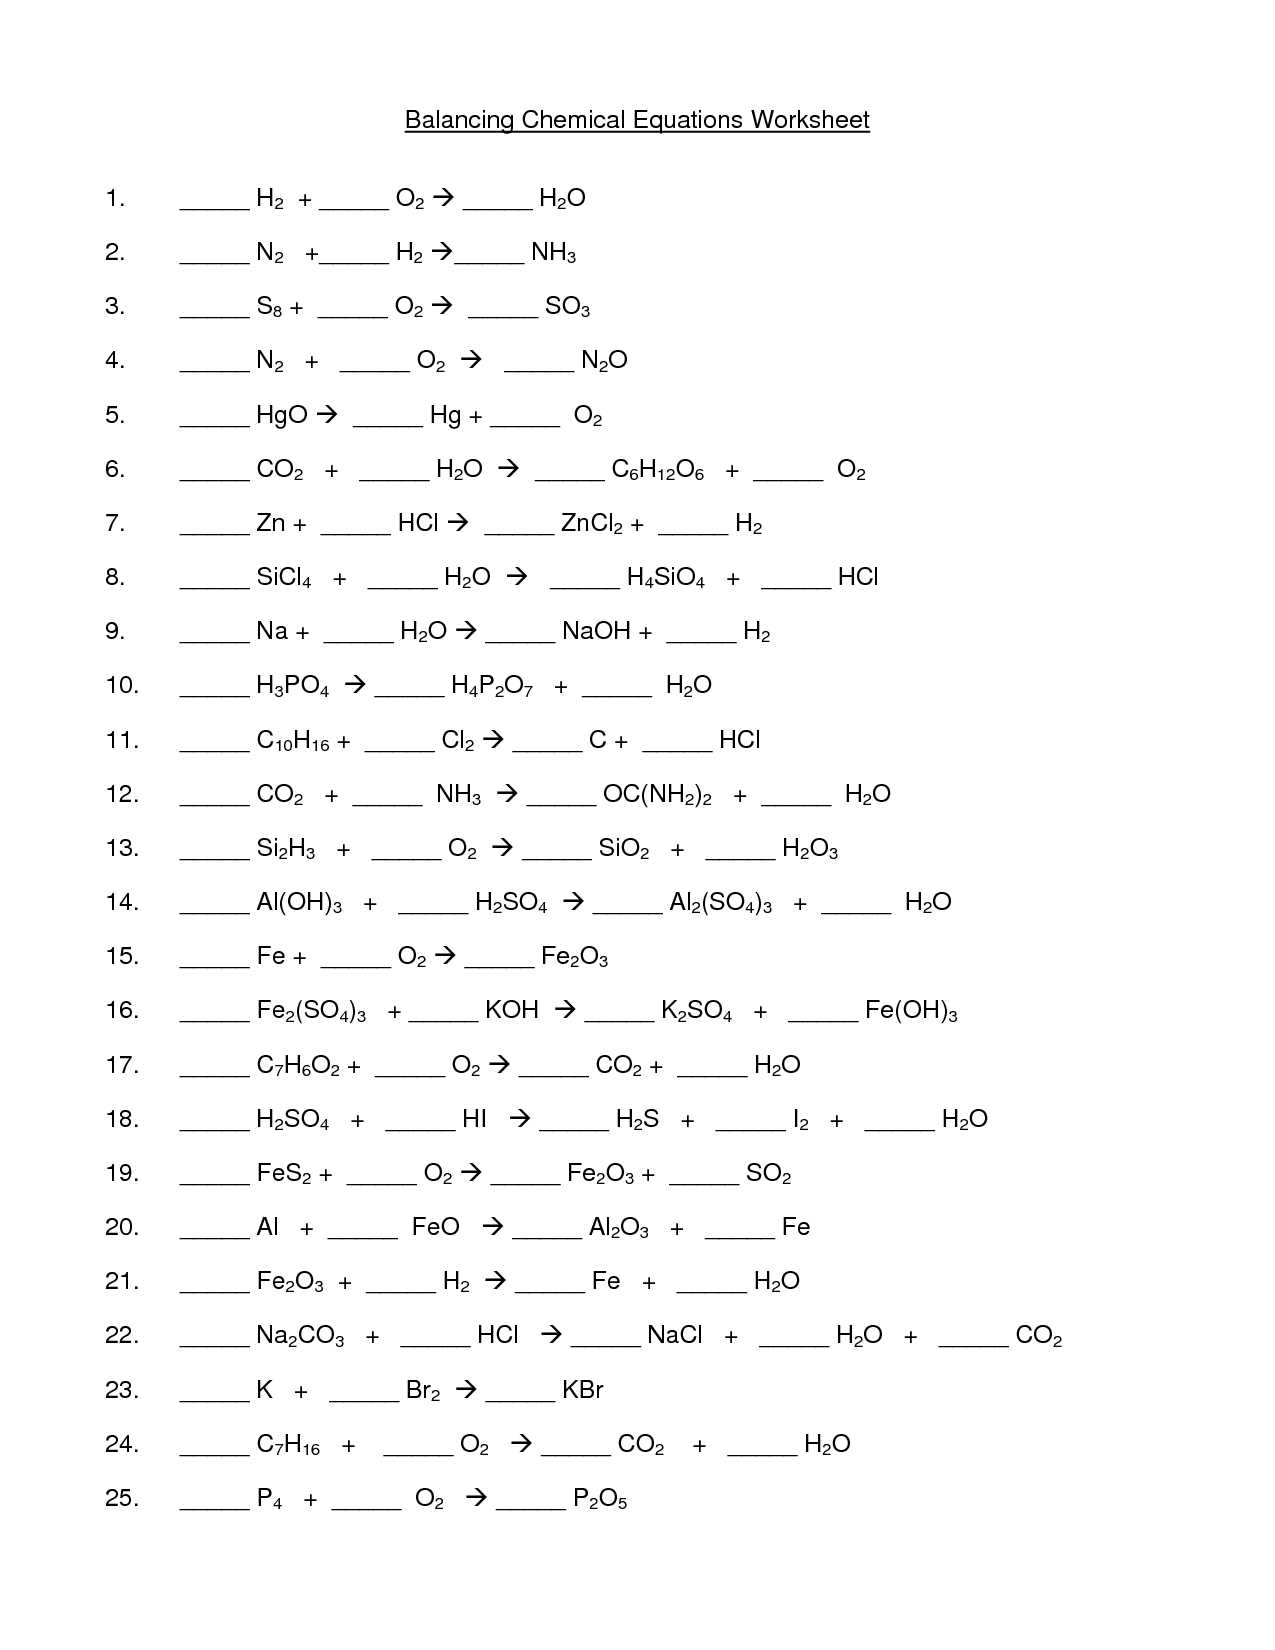 balancing chemical equations worksheet intermediate level answers